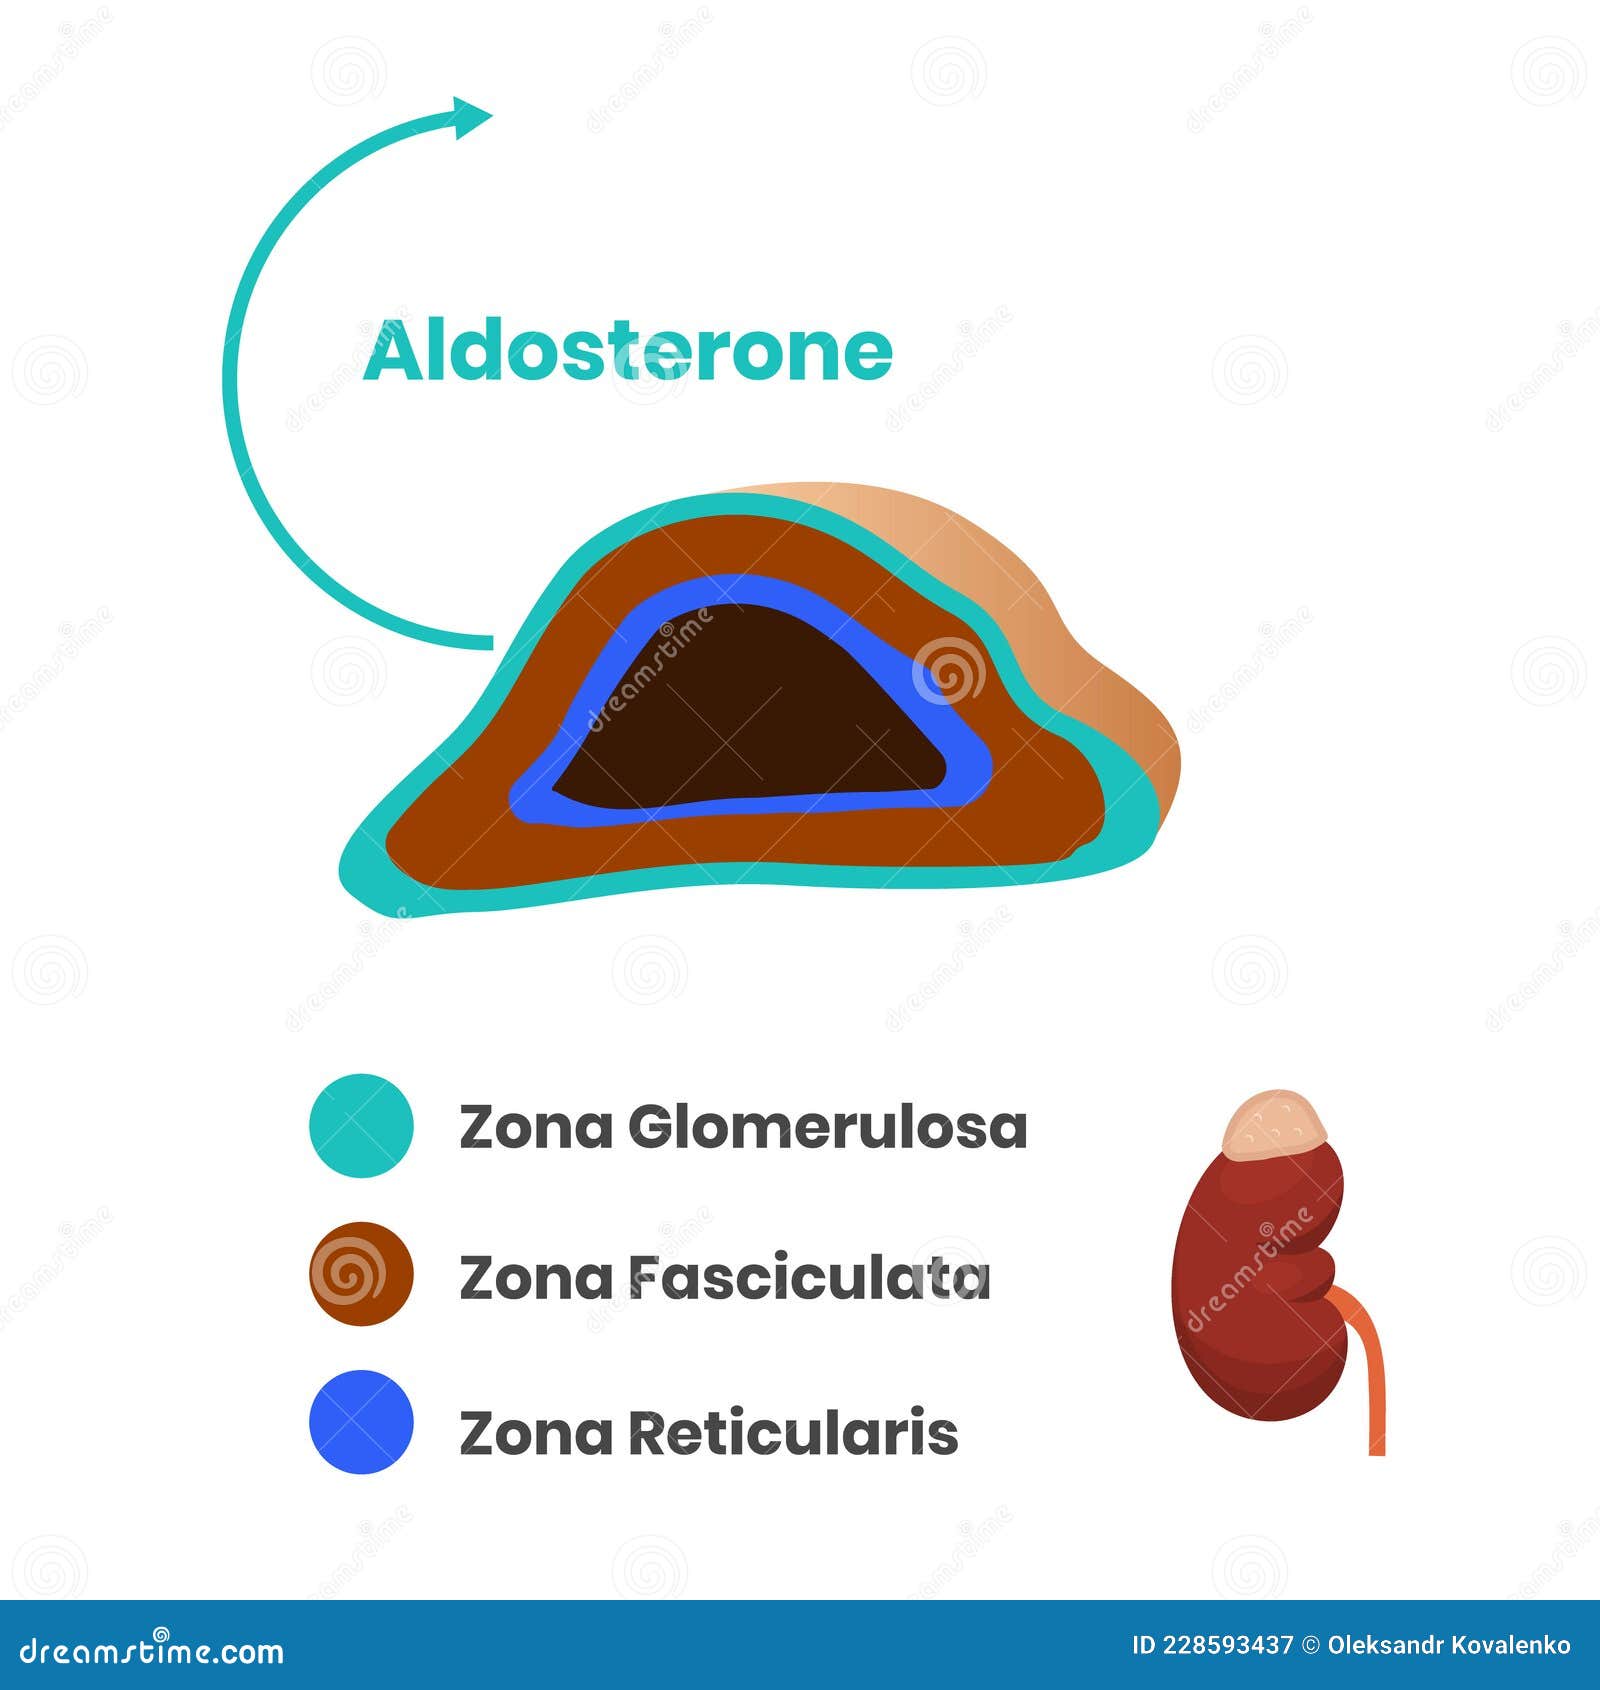 adrenal cortex structure. zona glomerulosa